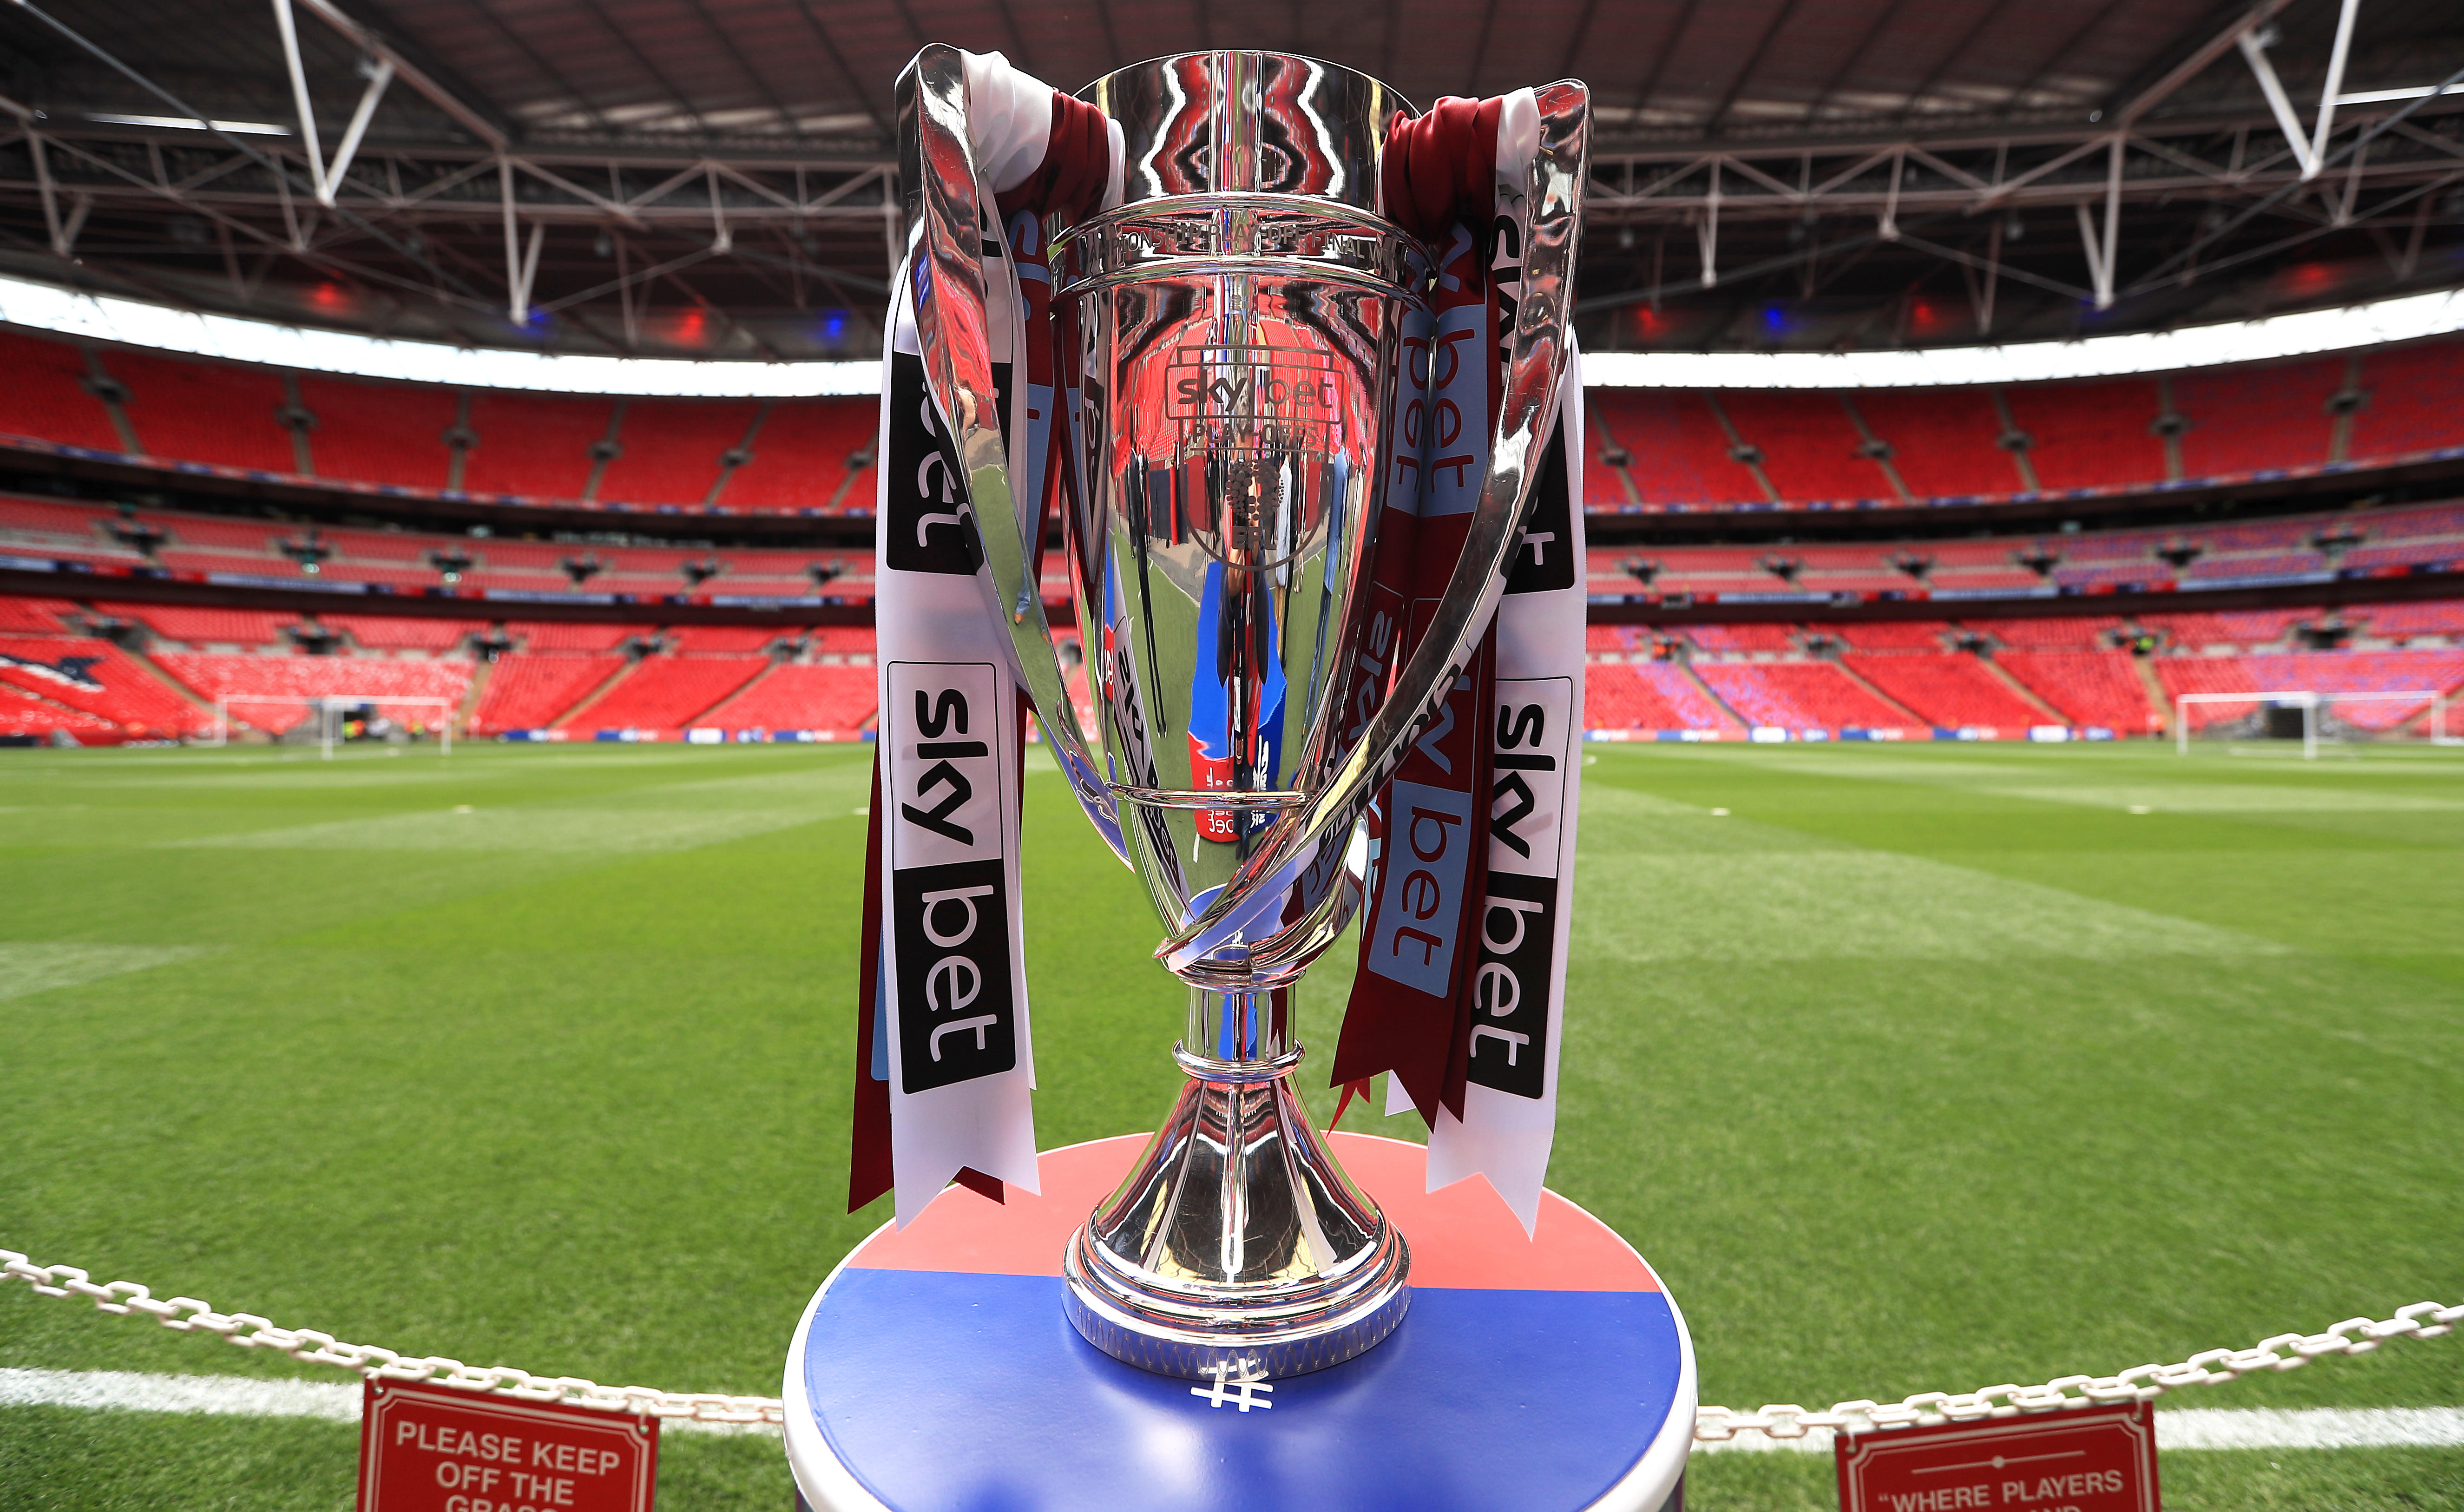 English Championship Preview: Soccer Betting Picks Ahead of Season